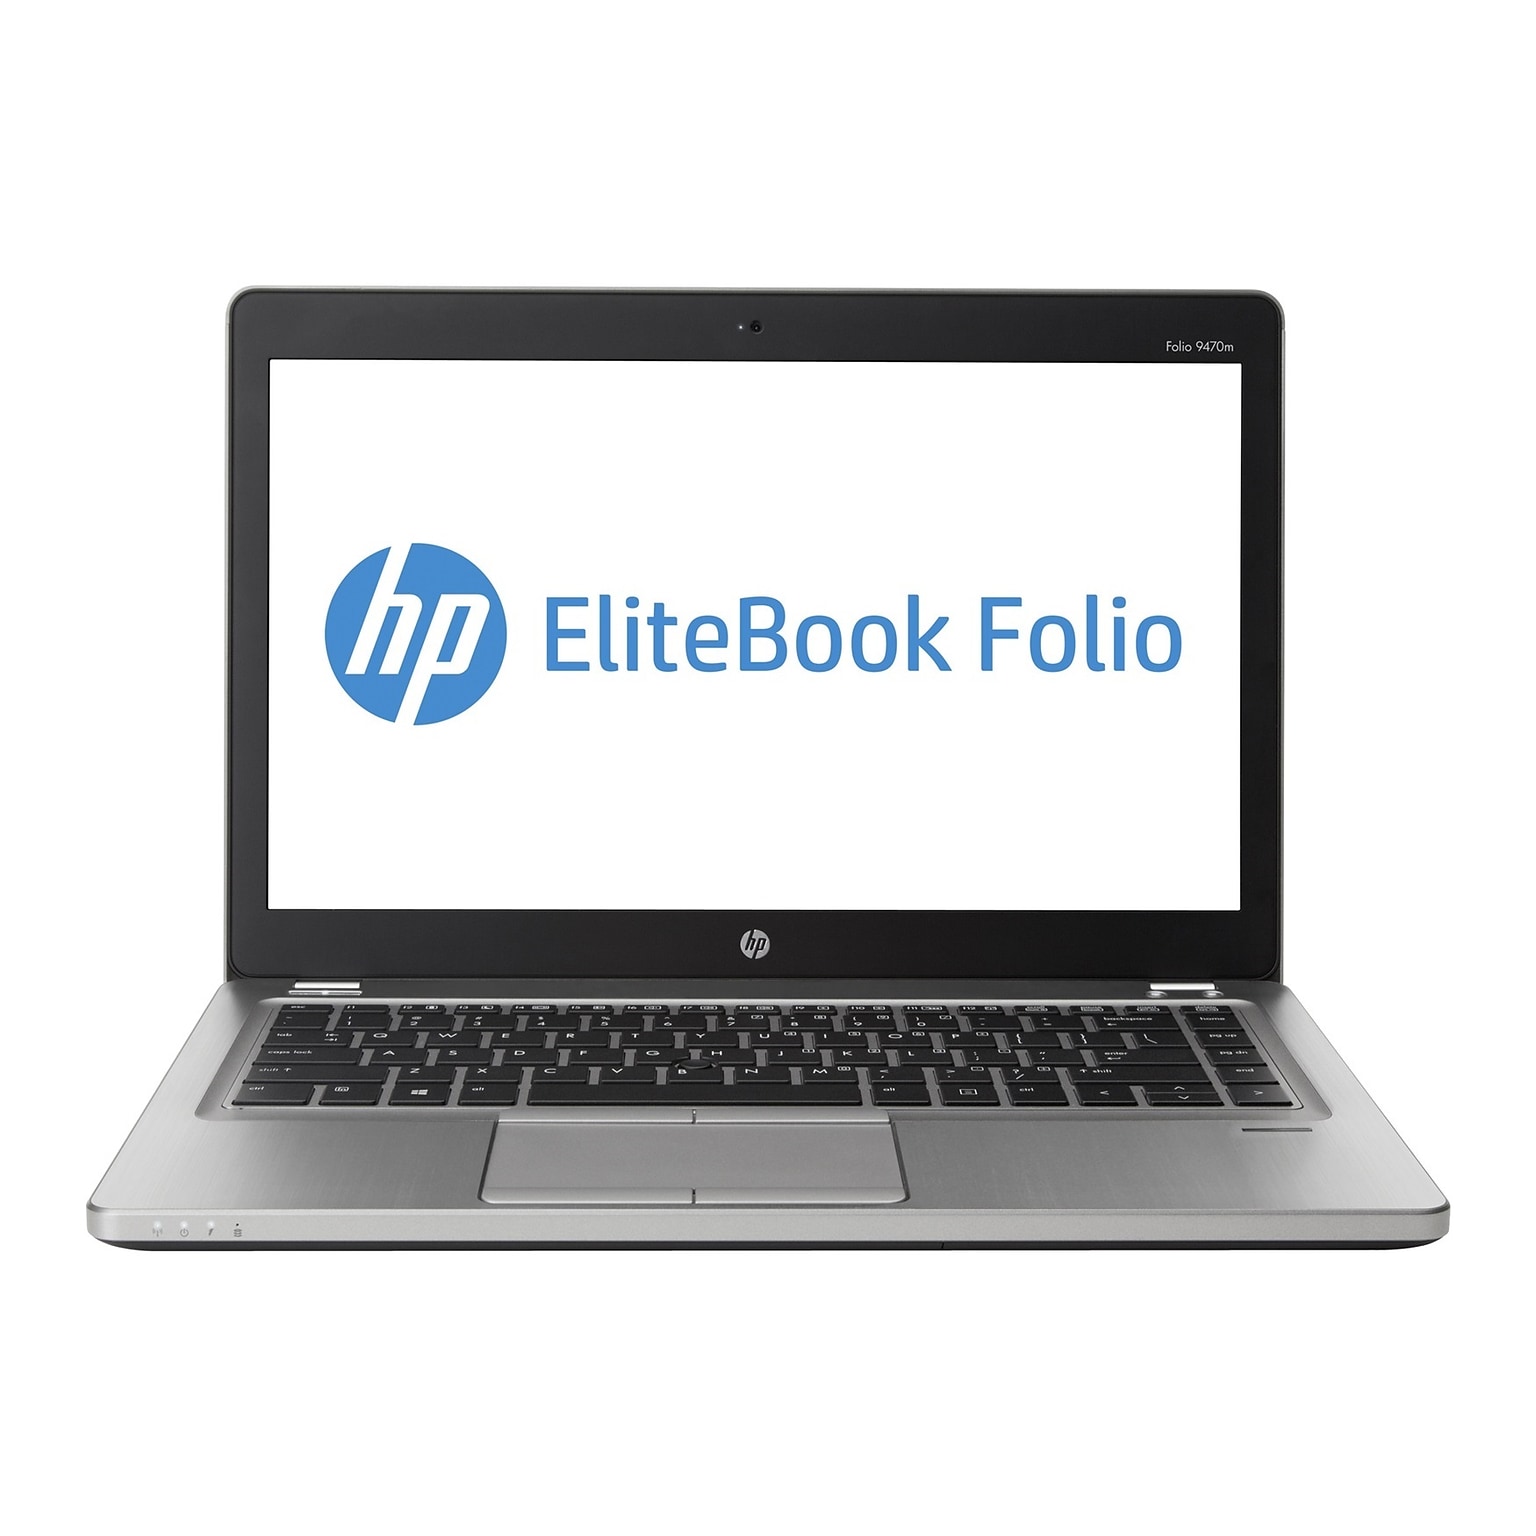 HP EliteBook Folio 9470M 14 Refurbished Laptop, Intel i5 3437U, 8GB Memory, 320GB Hard Drive, Windows 10 Pro